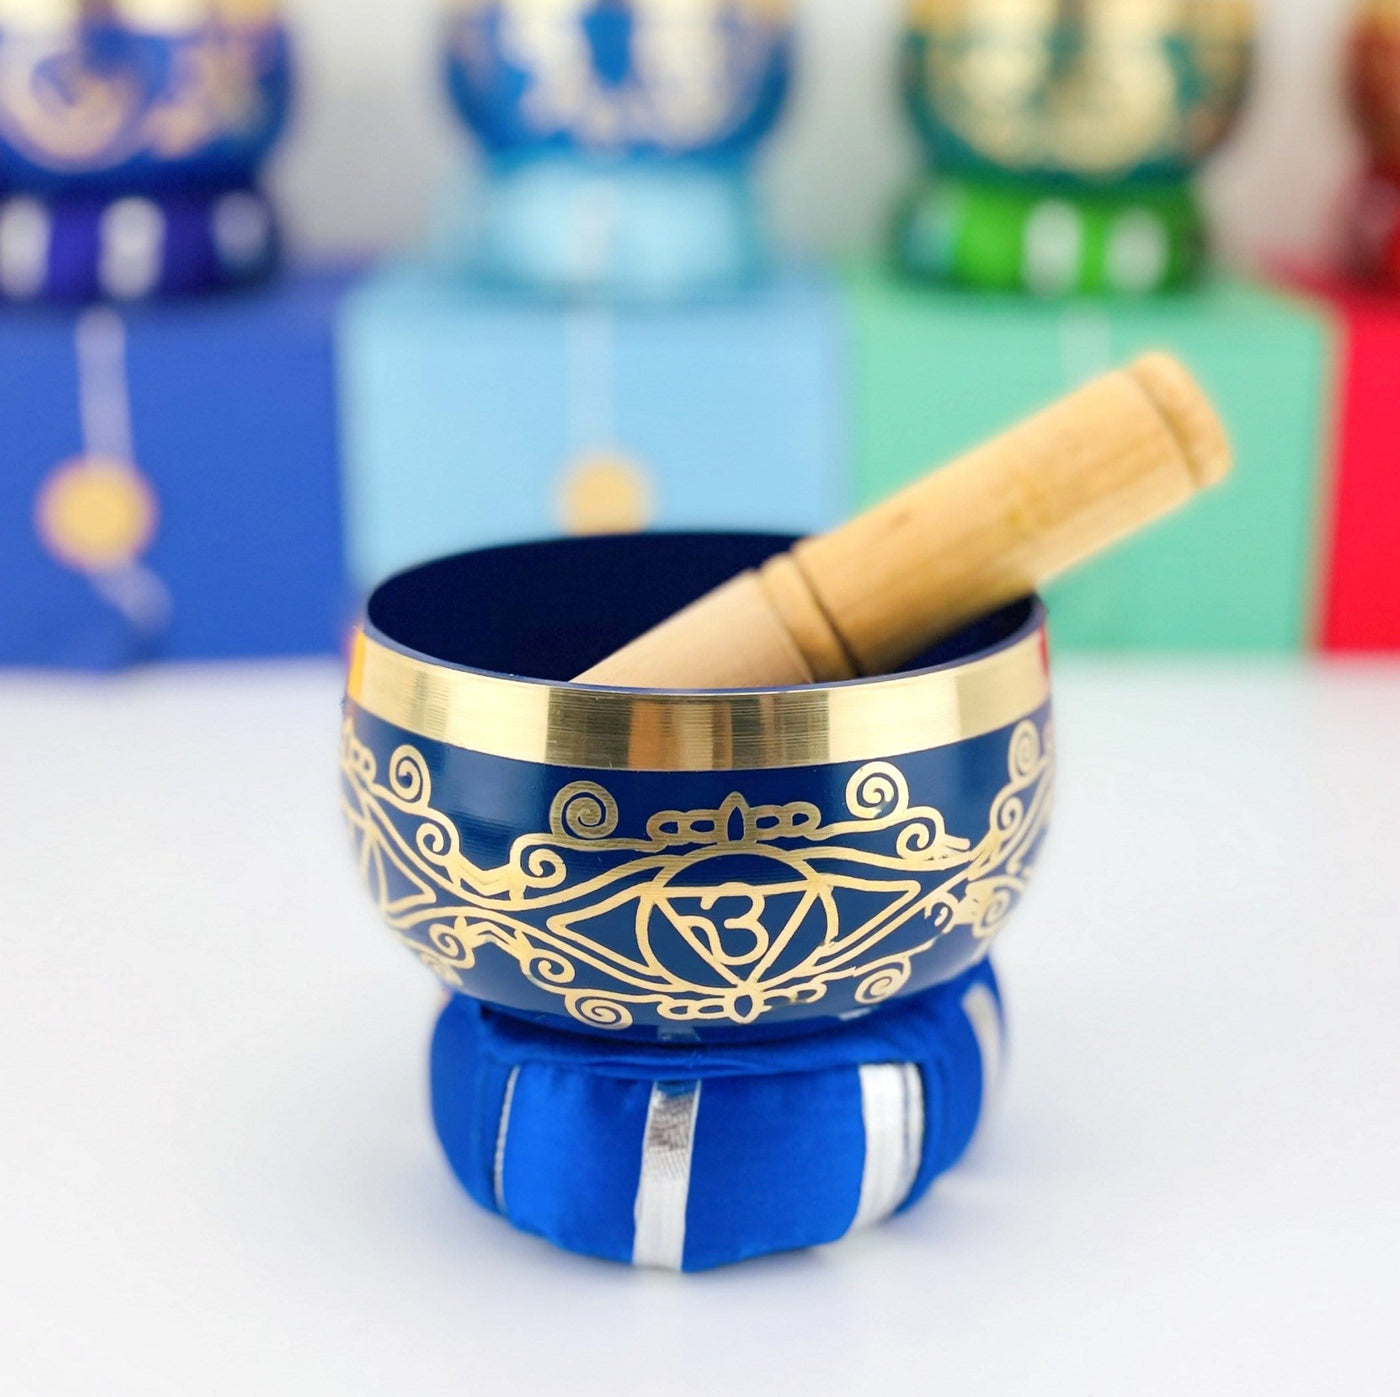 Brass Tibetan Singing Bowls - blue bowl on a table